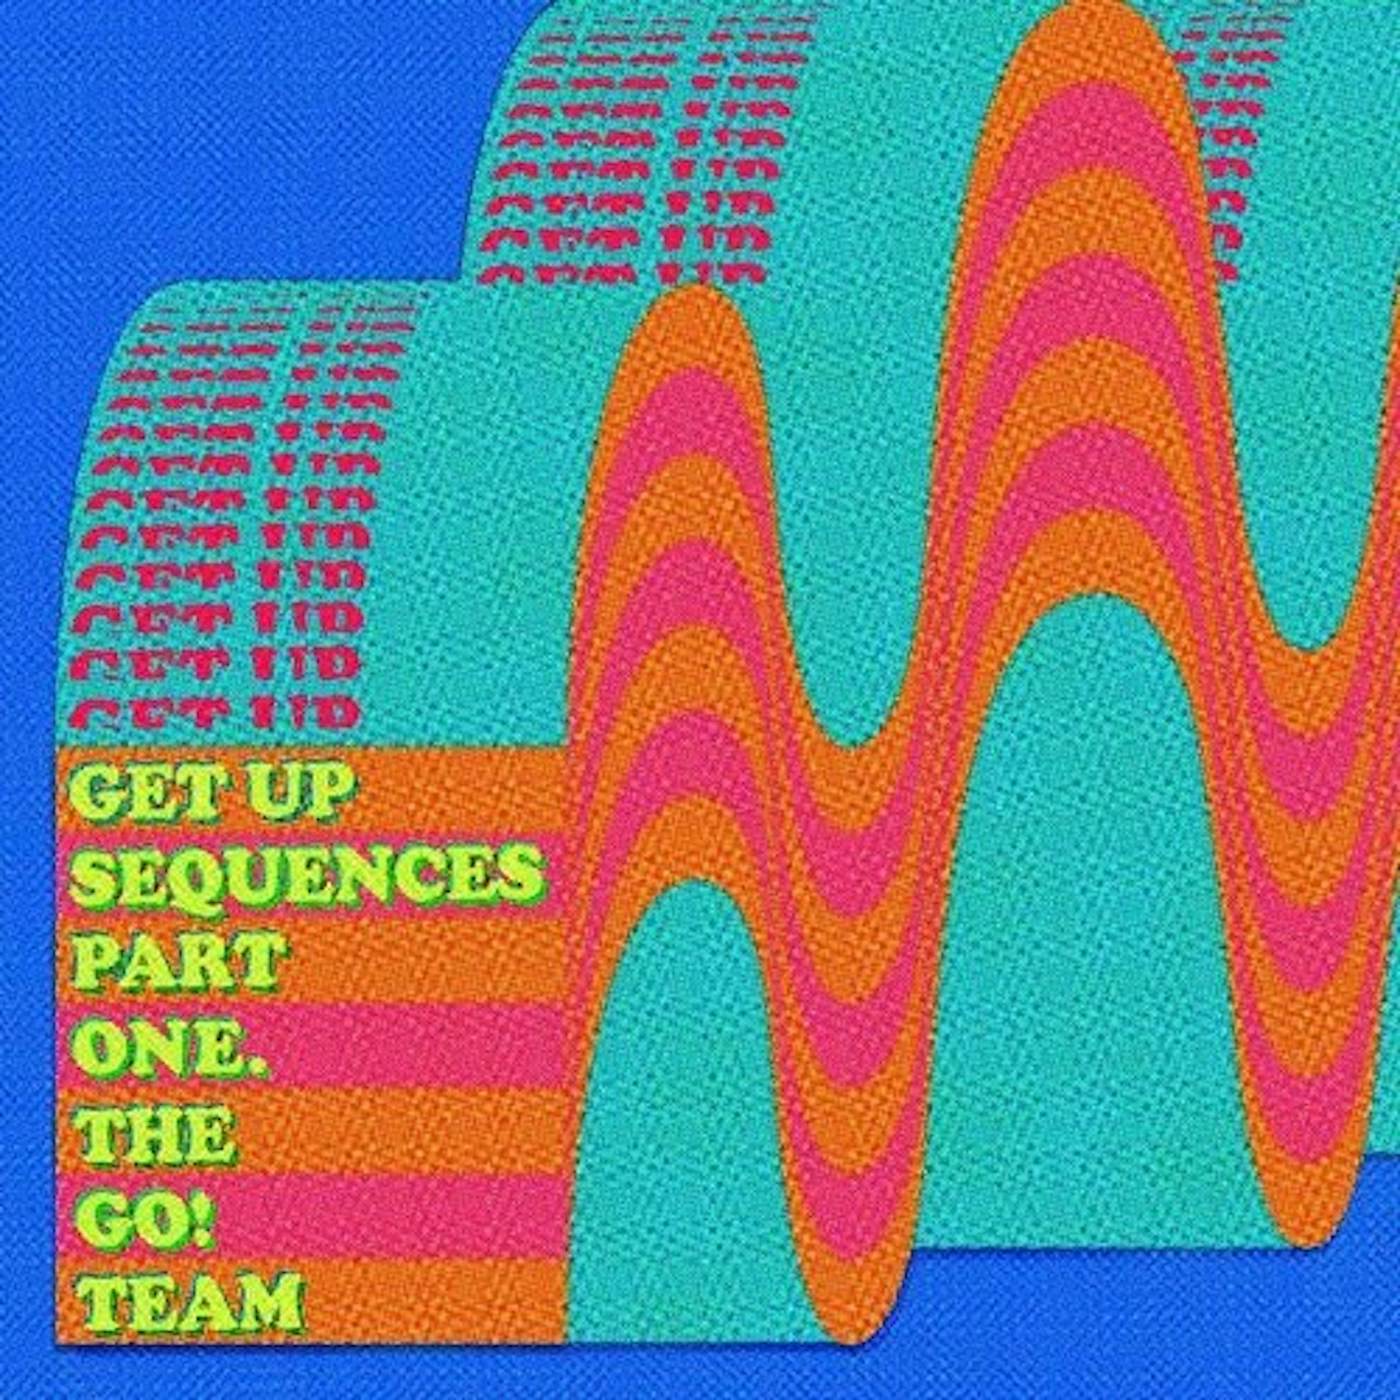 Go Team Go GET UP SEQUENCES PART ONE CD